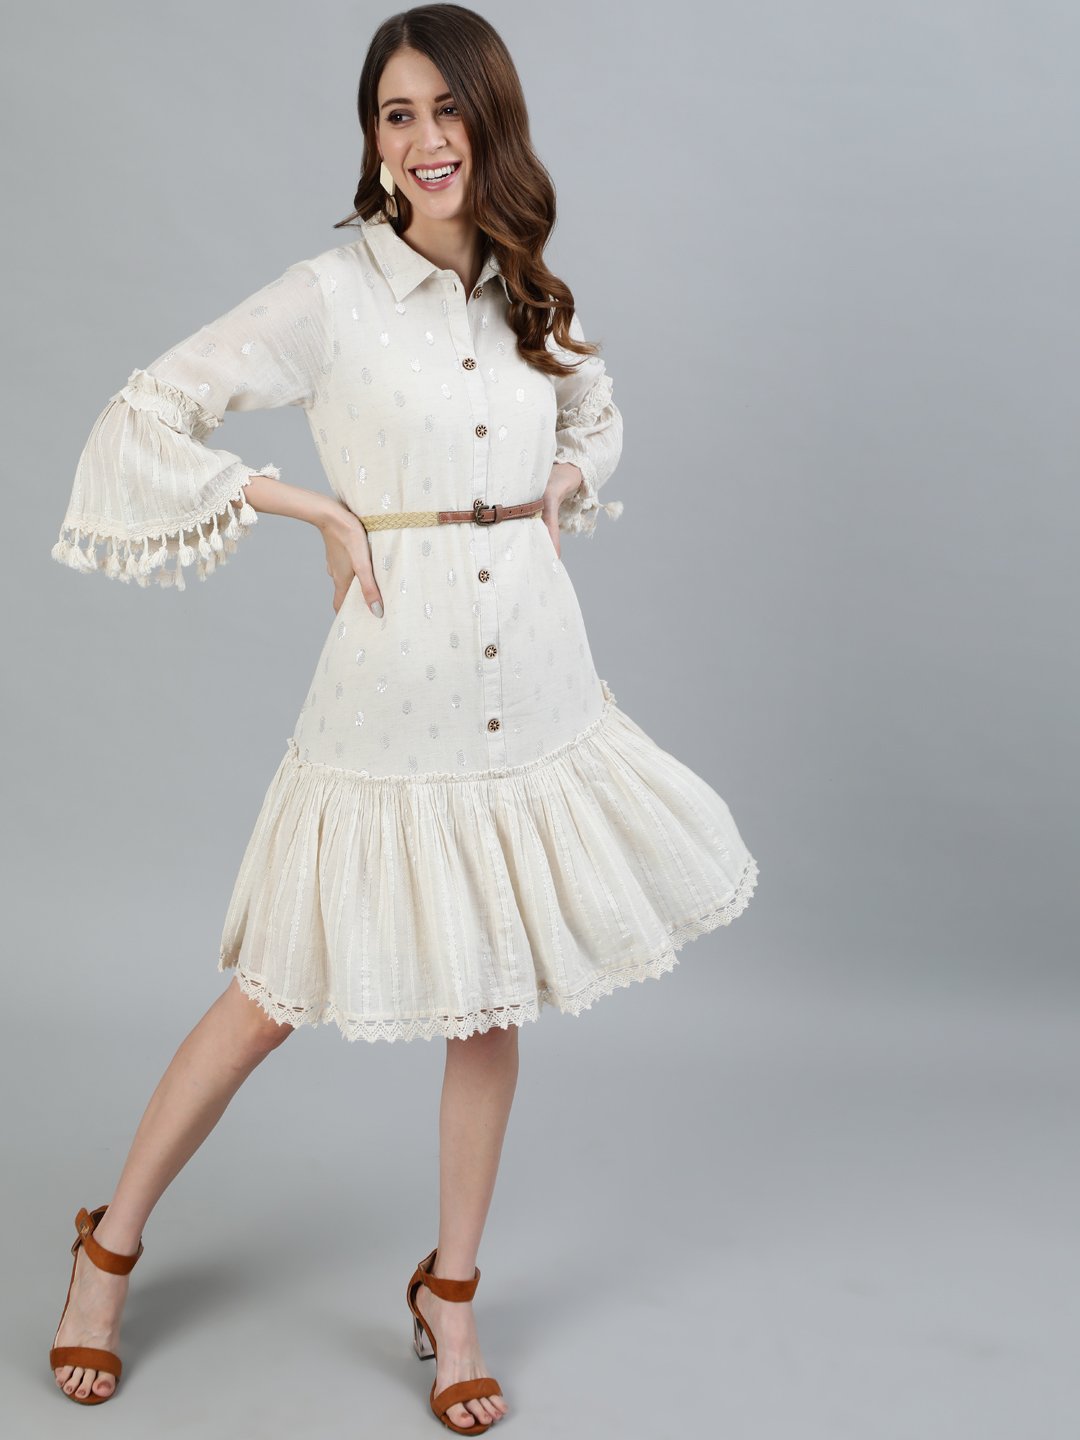 Ishin Women's Cotton Off White Embellished A-Line Dress